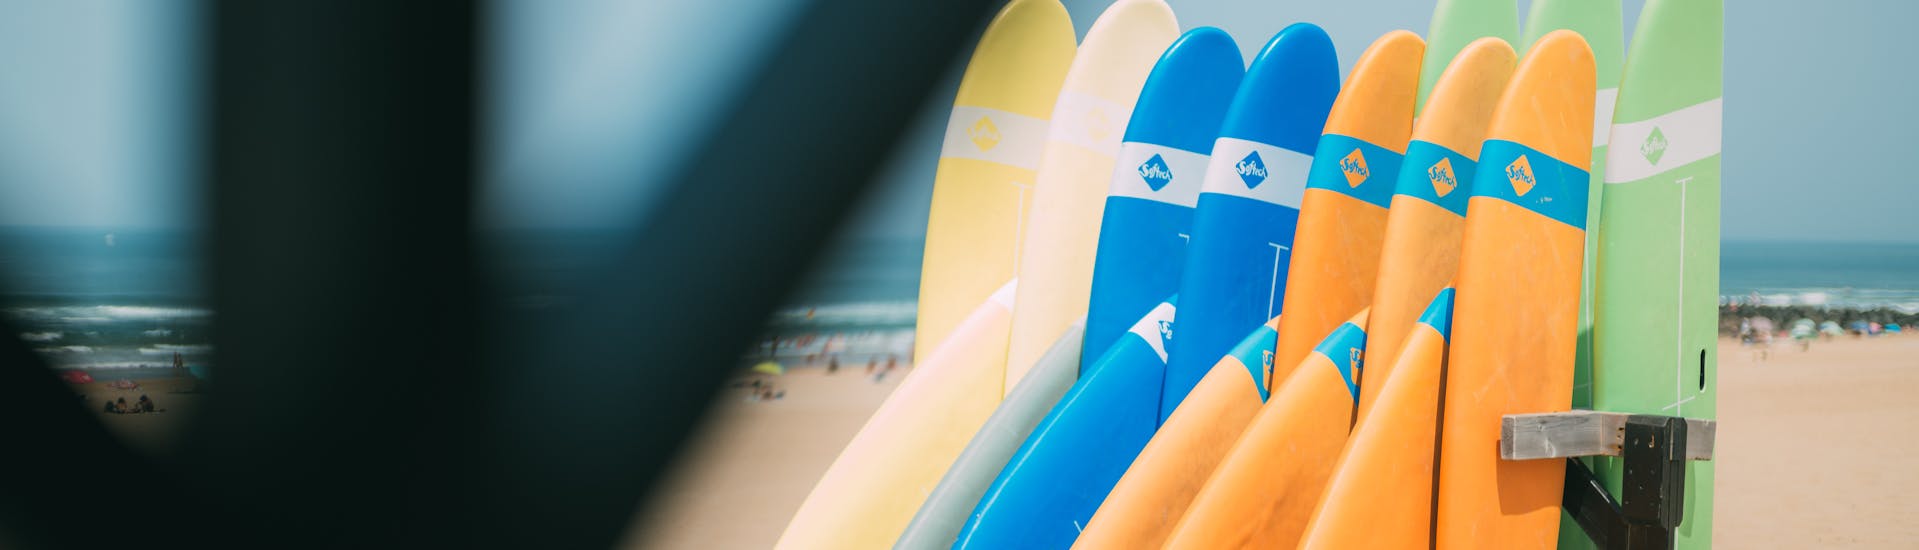 private-surfing-lessons-marinella-beach-escf-anglet